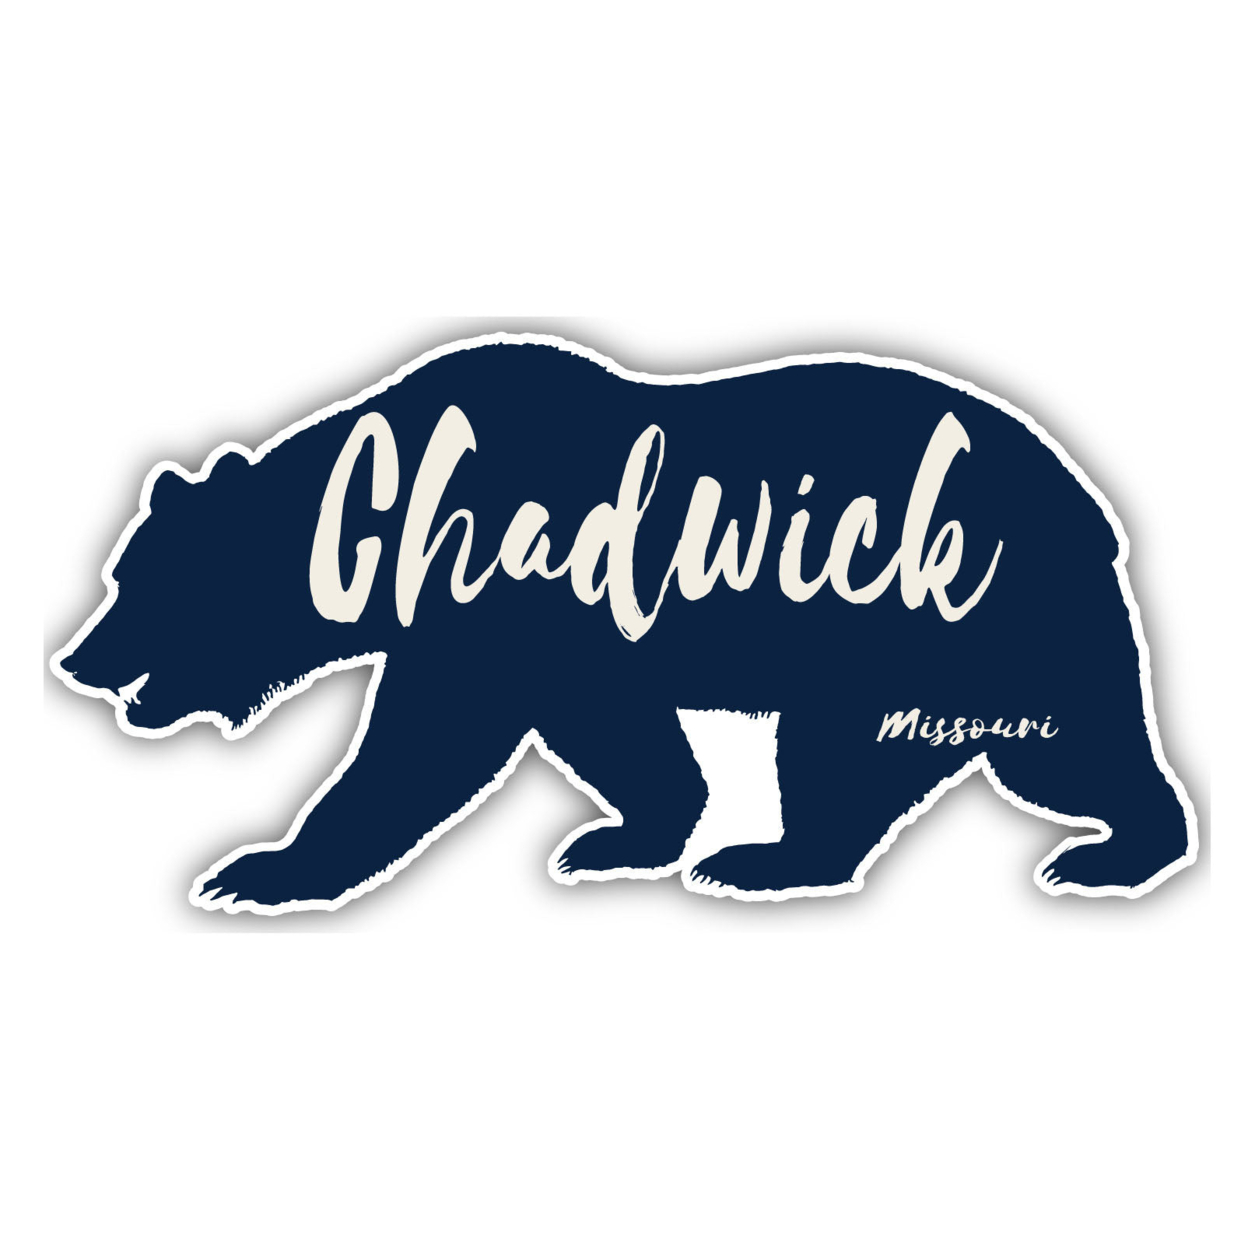 Chadwick Missouri Souvenir Decorative Stickers (Choose Theme And Size) - Single Unit, 10-Inch, Adventures Awaits